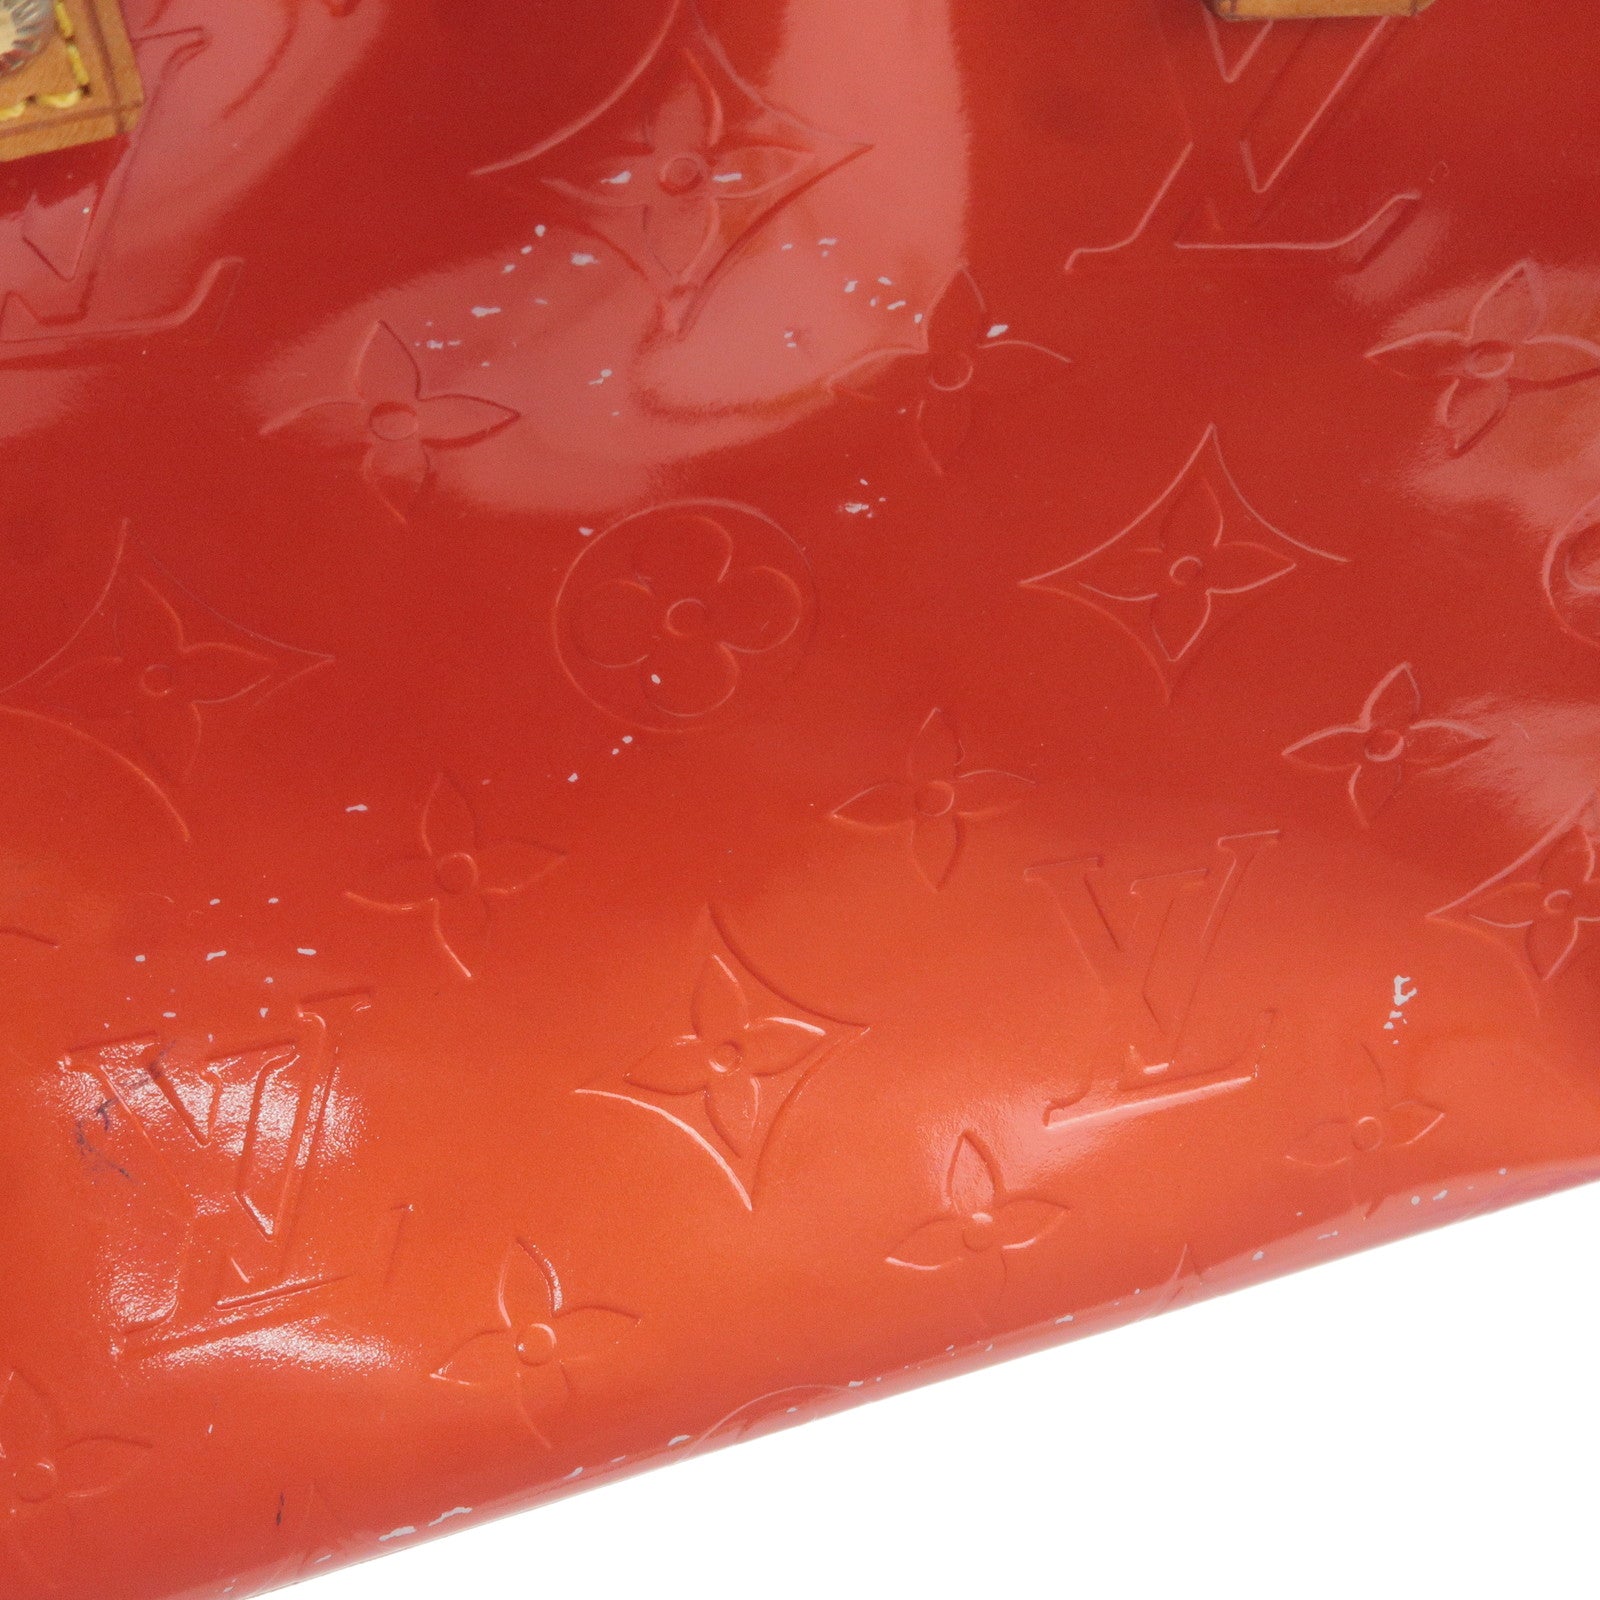 Louis Vuitton Dark Red Griotte Monogram Vernis Leather Lockit PM